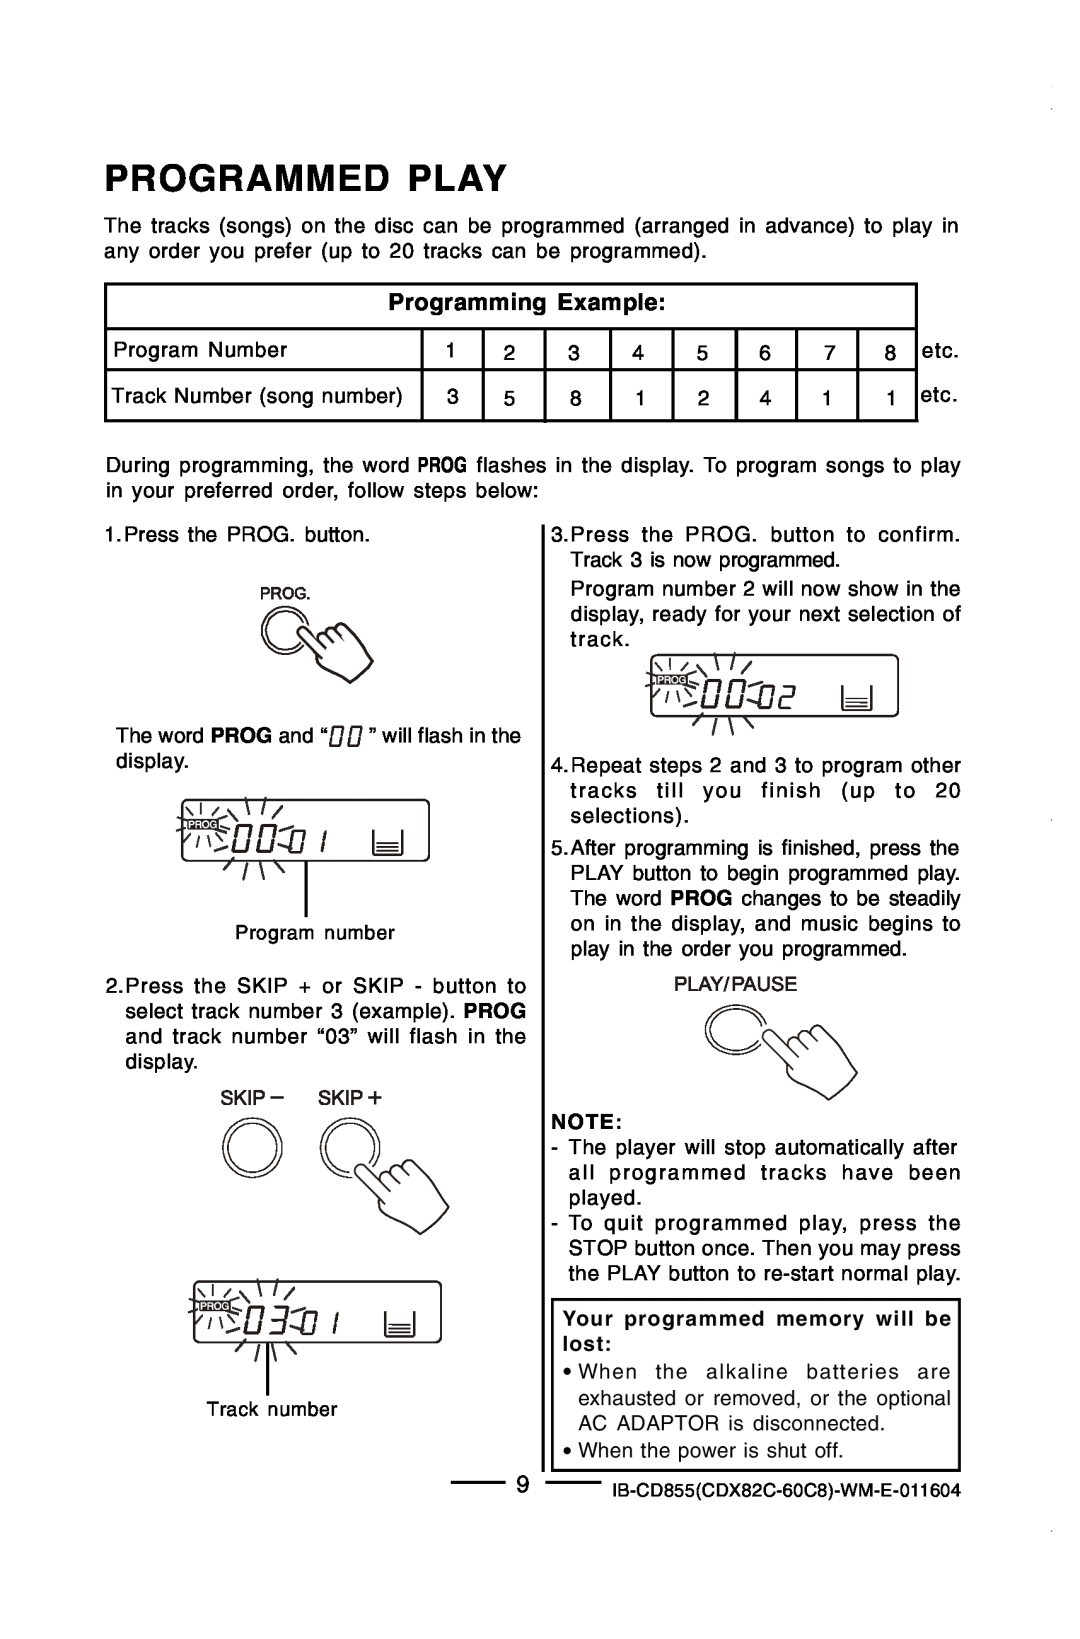 Durabrand CD-855 manual Programmed Play, Programming Example 